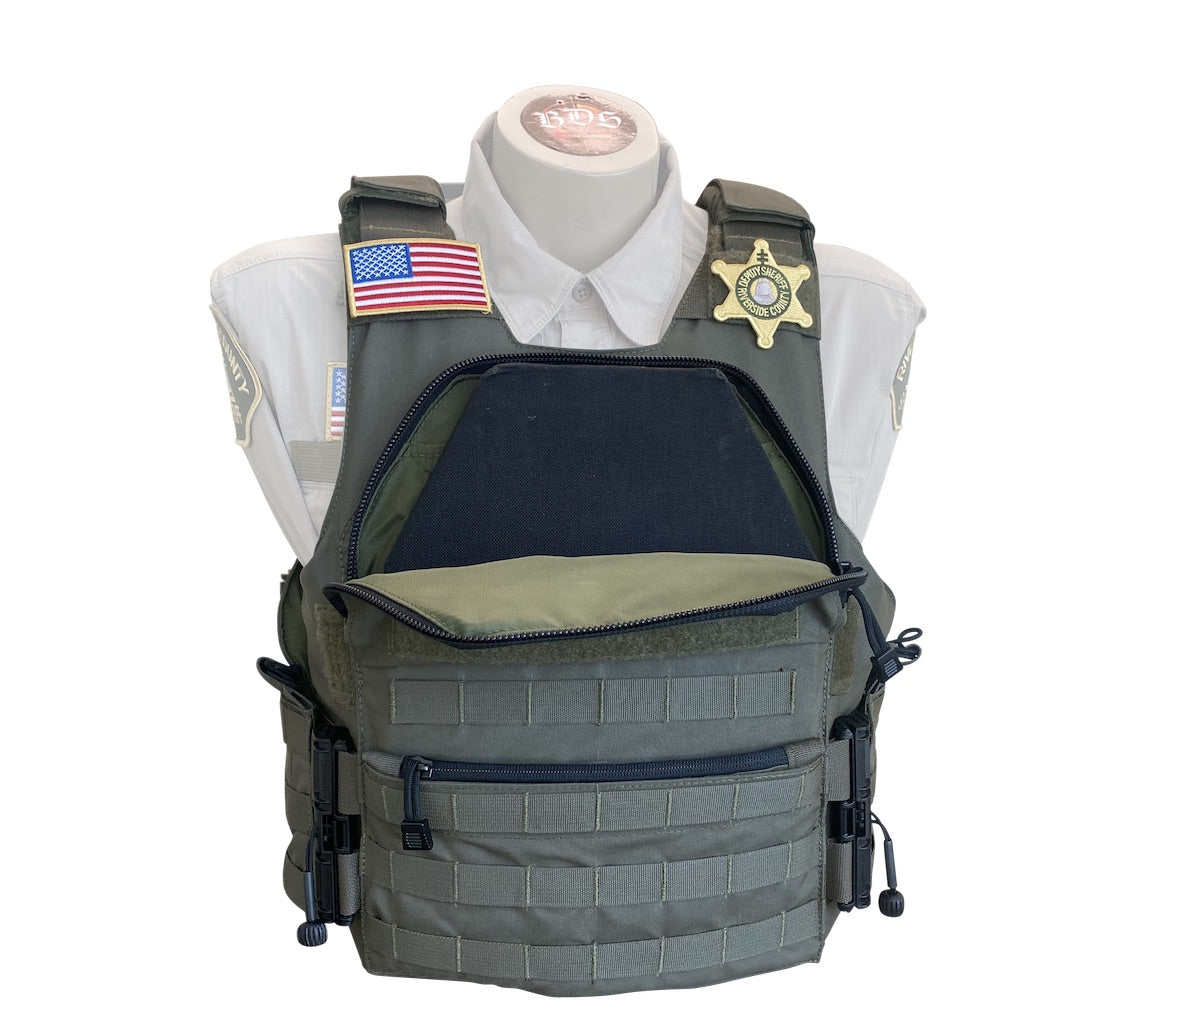 Load Bearing Vest Black VTG Tactical Gear w Duty Belt Police Security  Airsoft